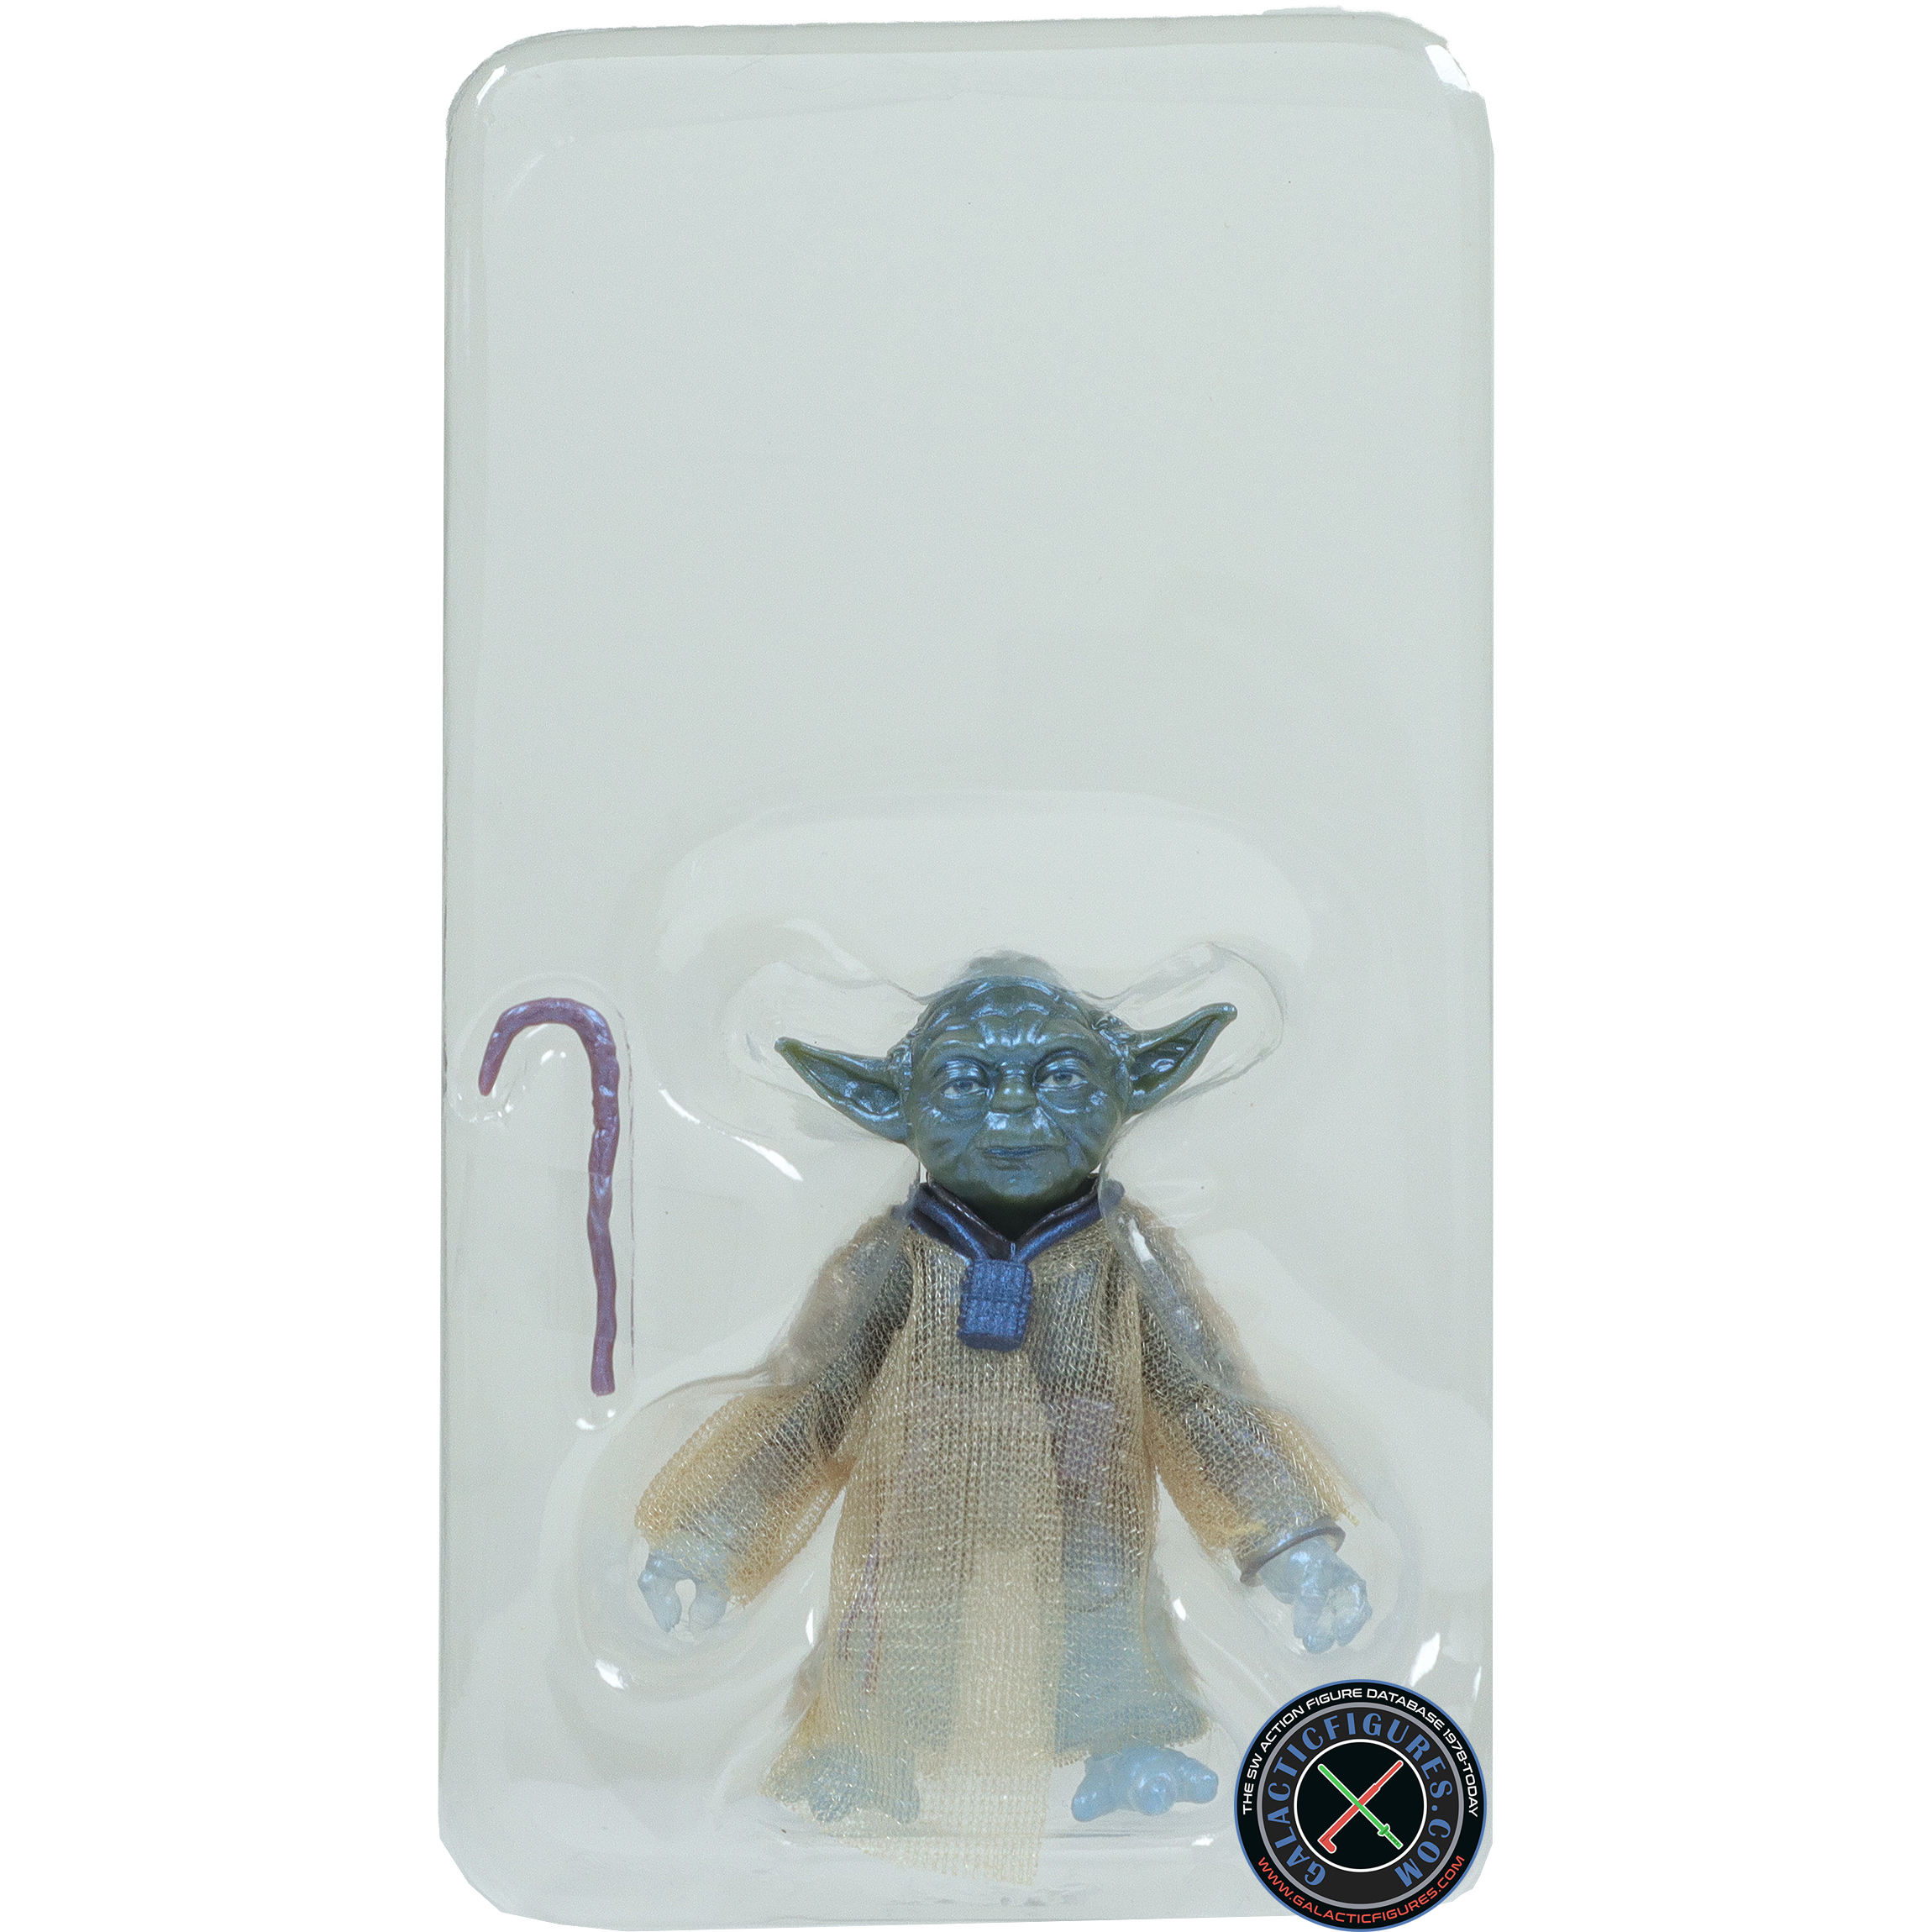 Yoda Force Spirit 3-Pack